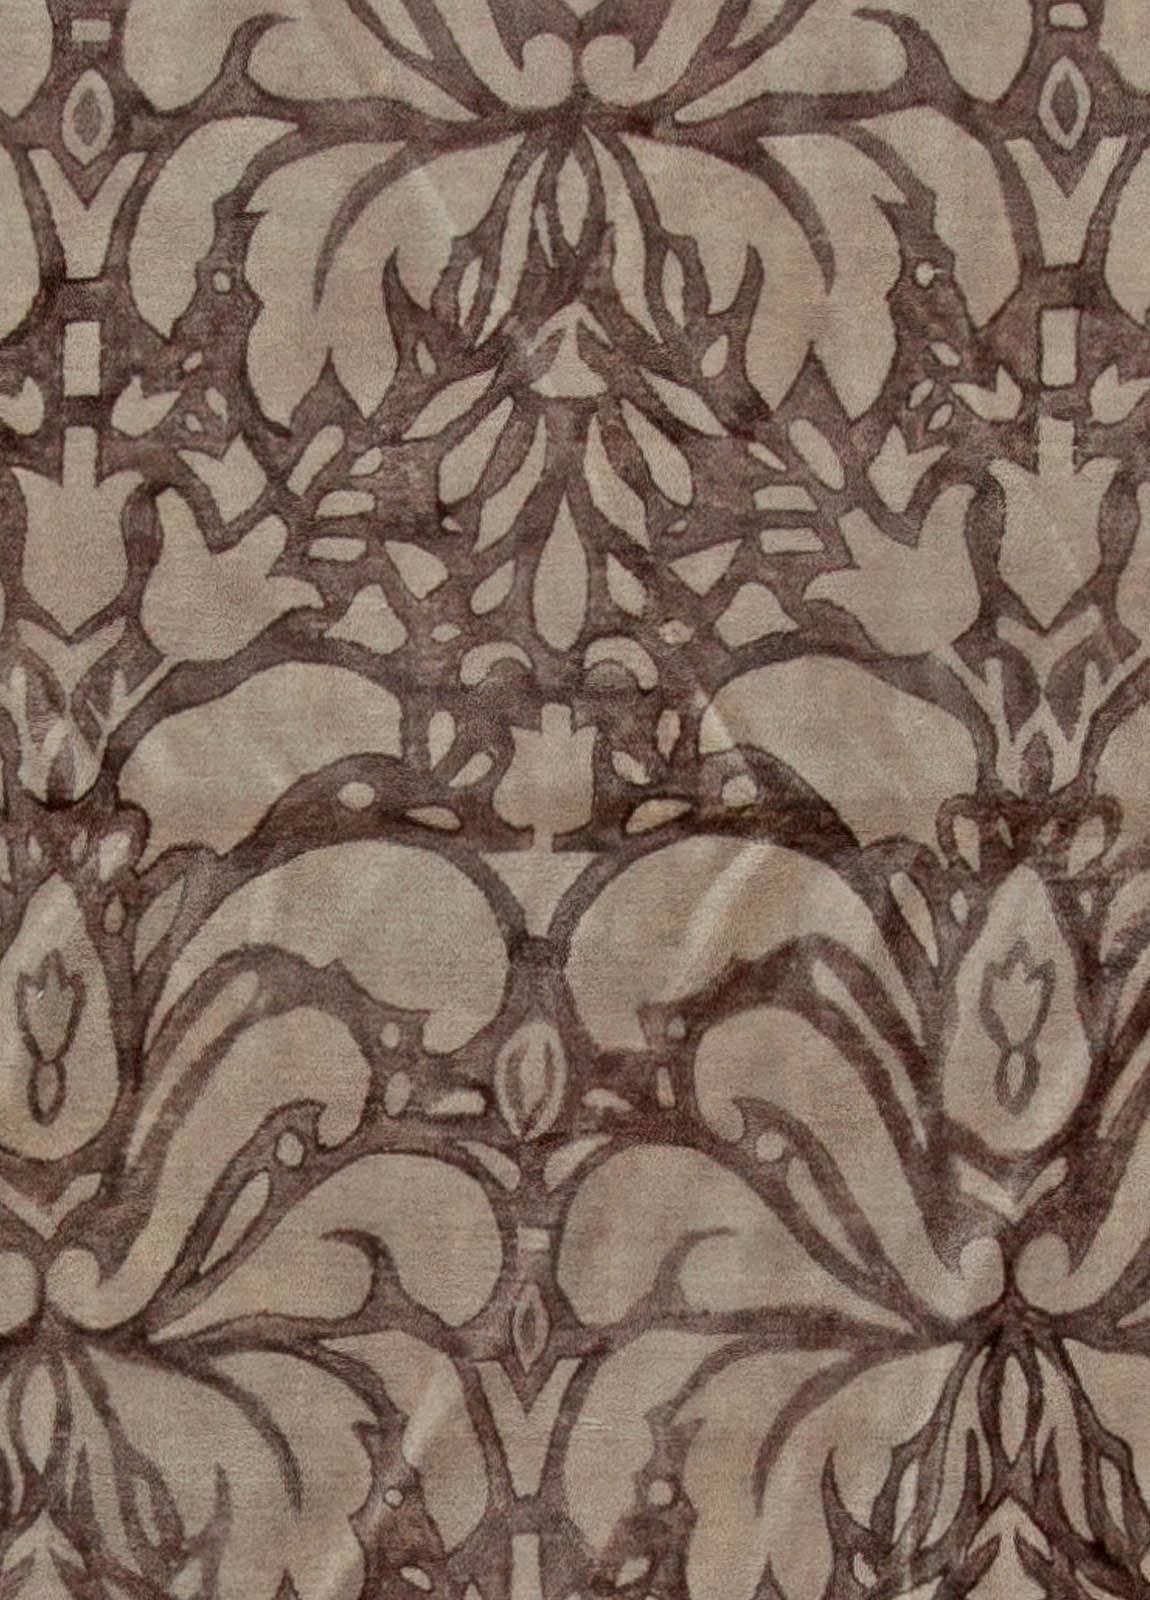 Contemporary floral design handmade wool rug by Doris Leslie Blau.
Size: 10'2